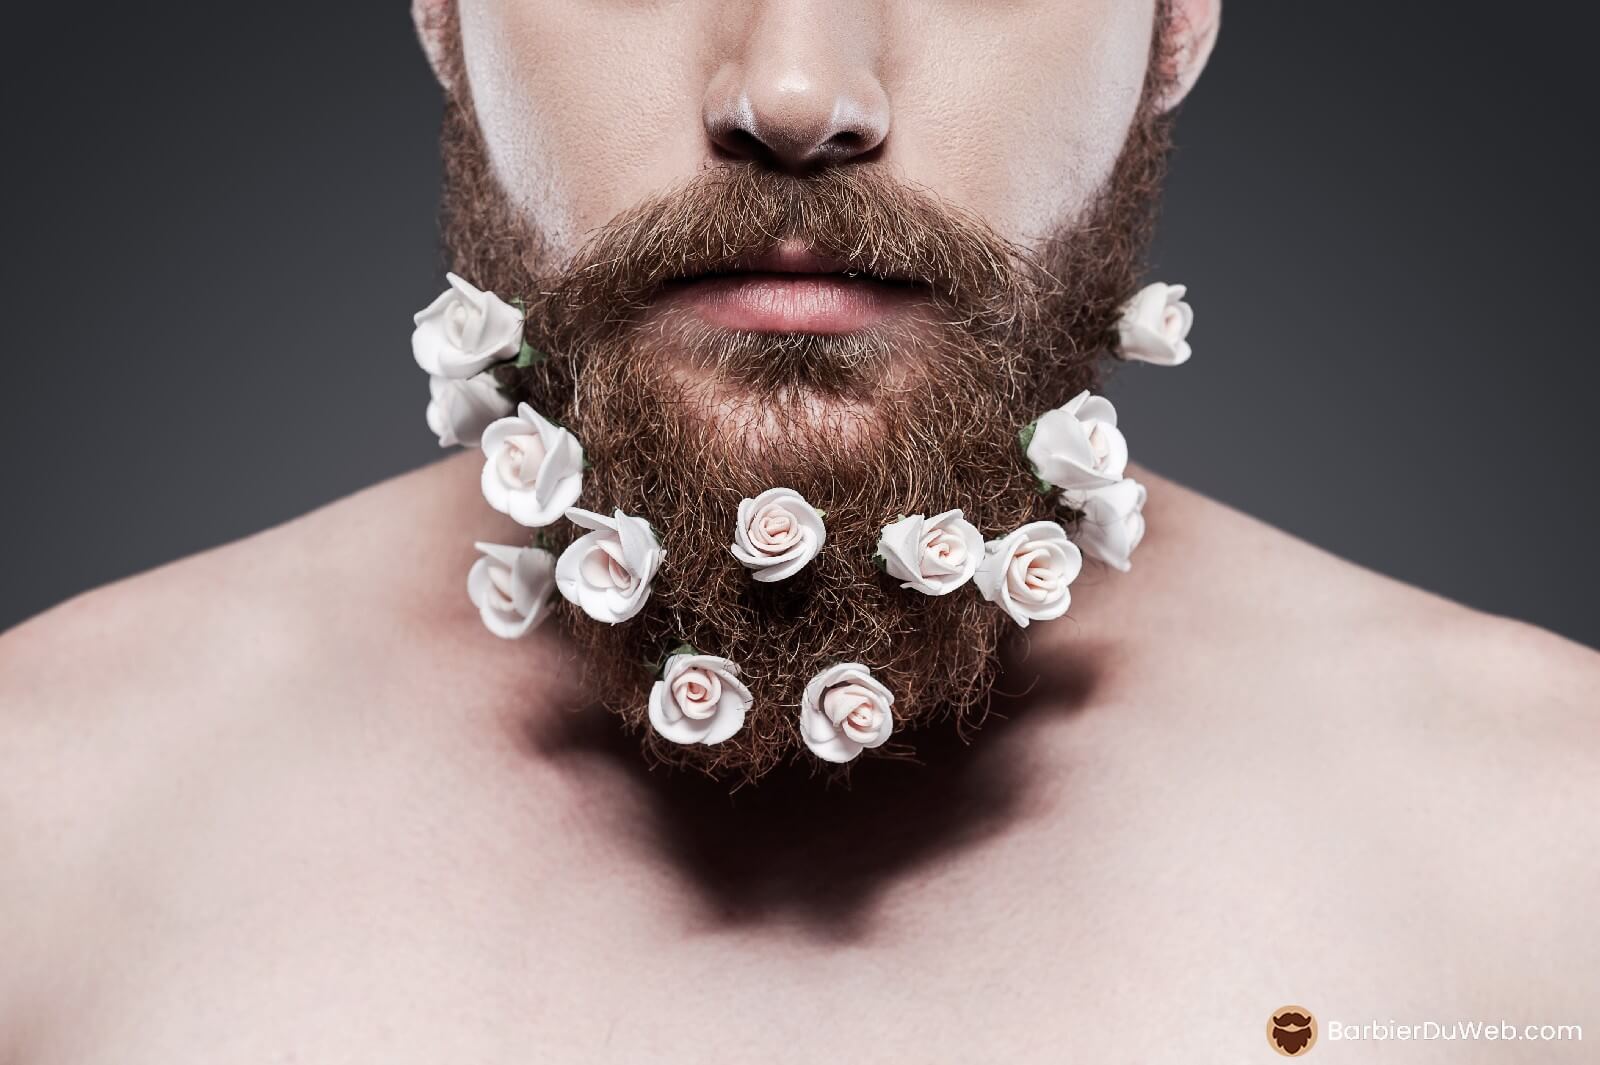 Beard with flowers (care)